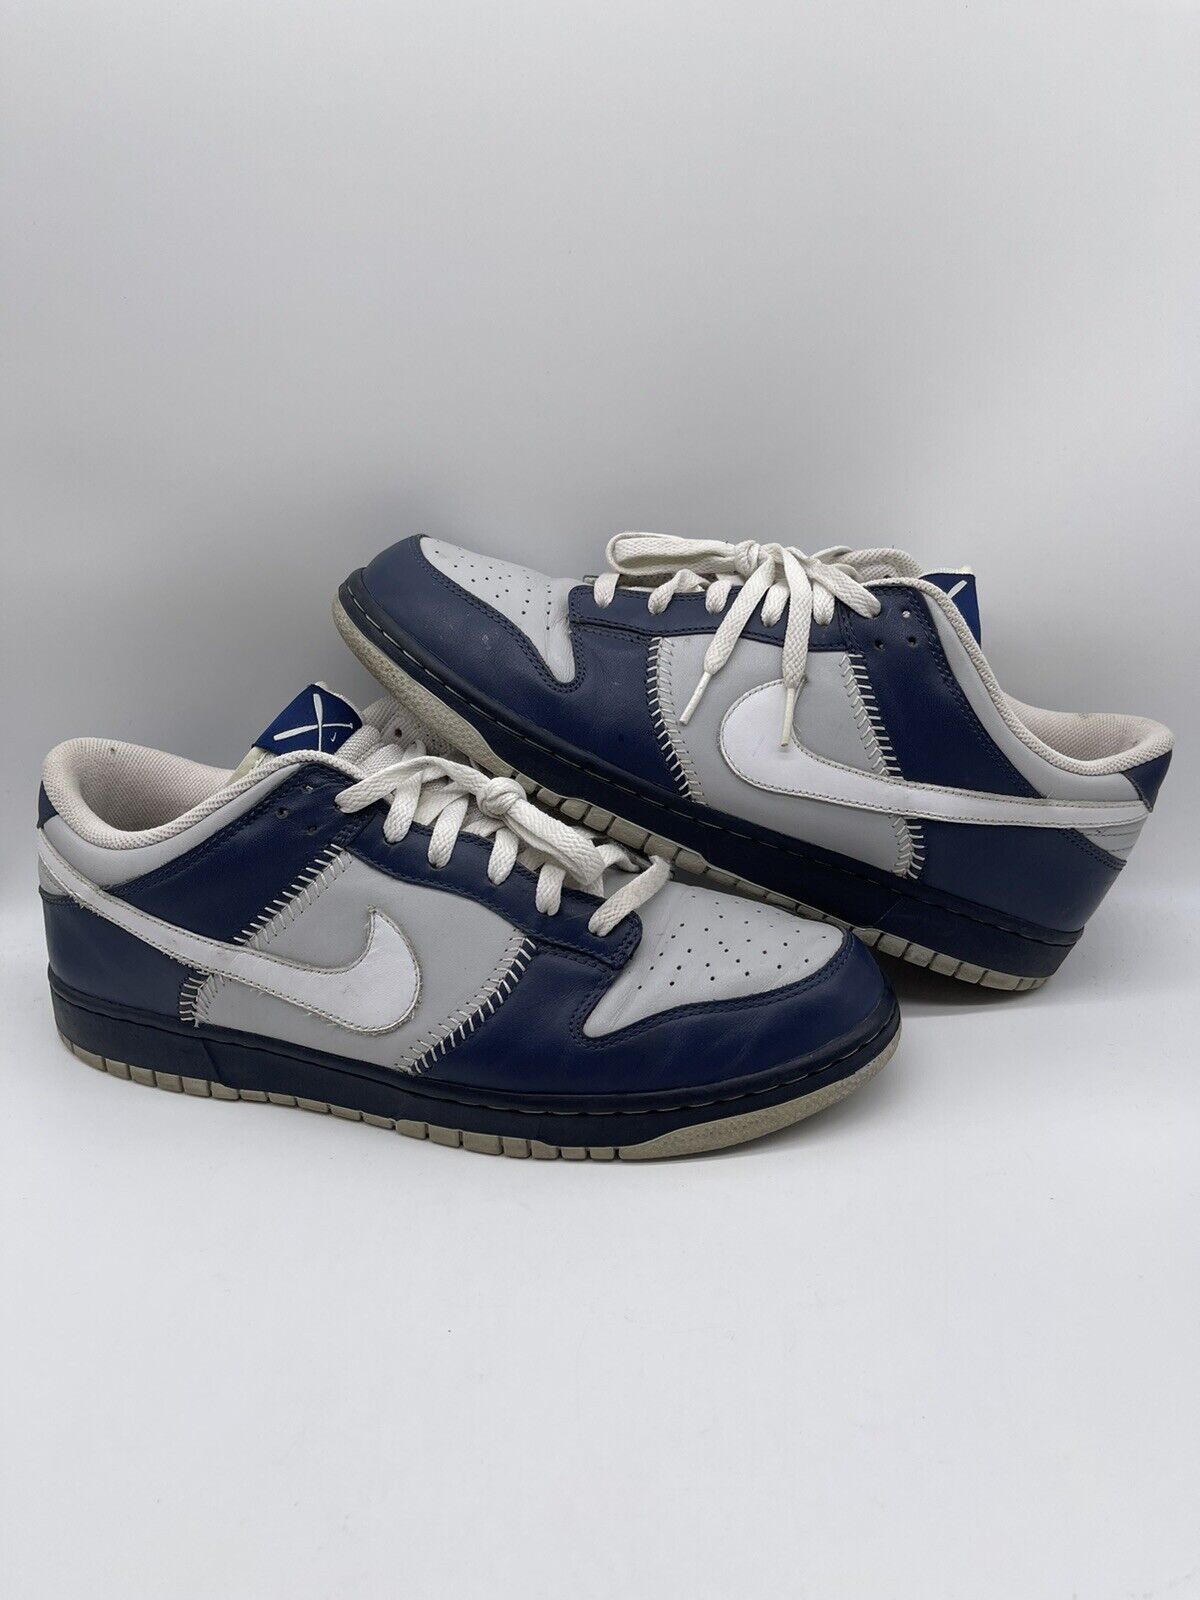 Nike SB Dunk Low Jeter Yankees Baseball Shoe Gray Navy Blue 309431-015 Size  13